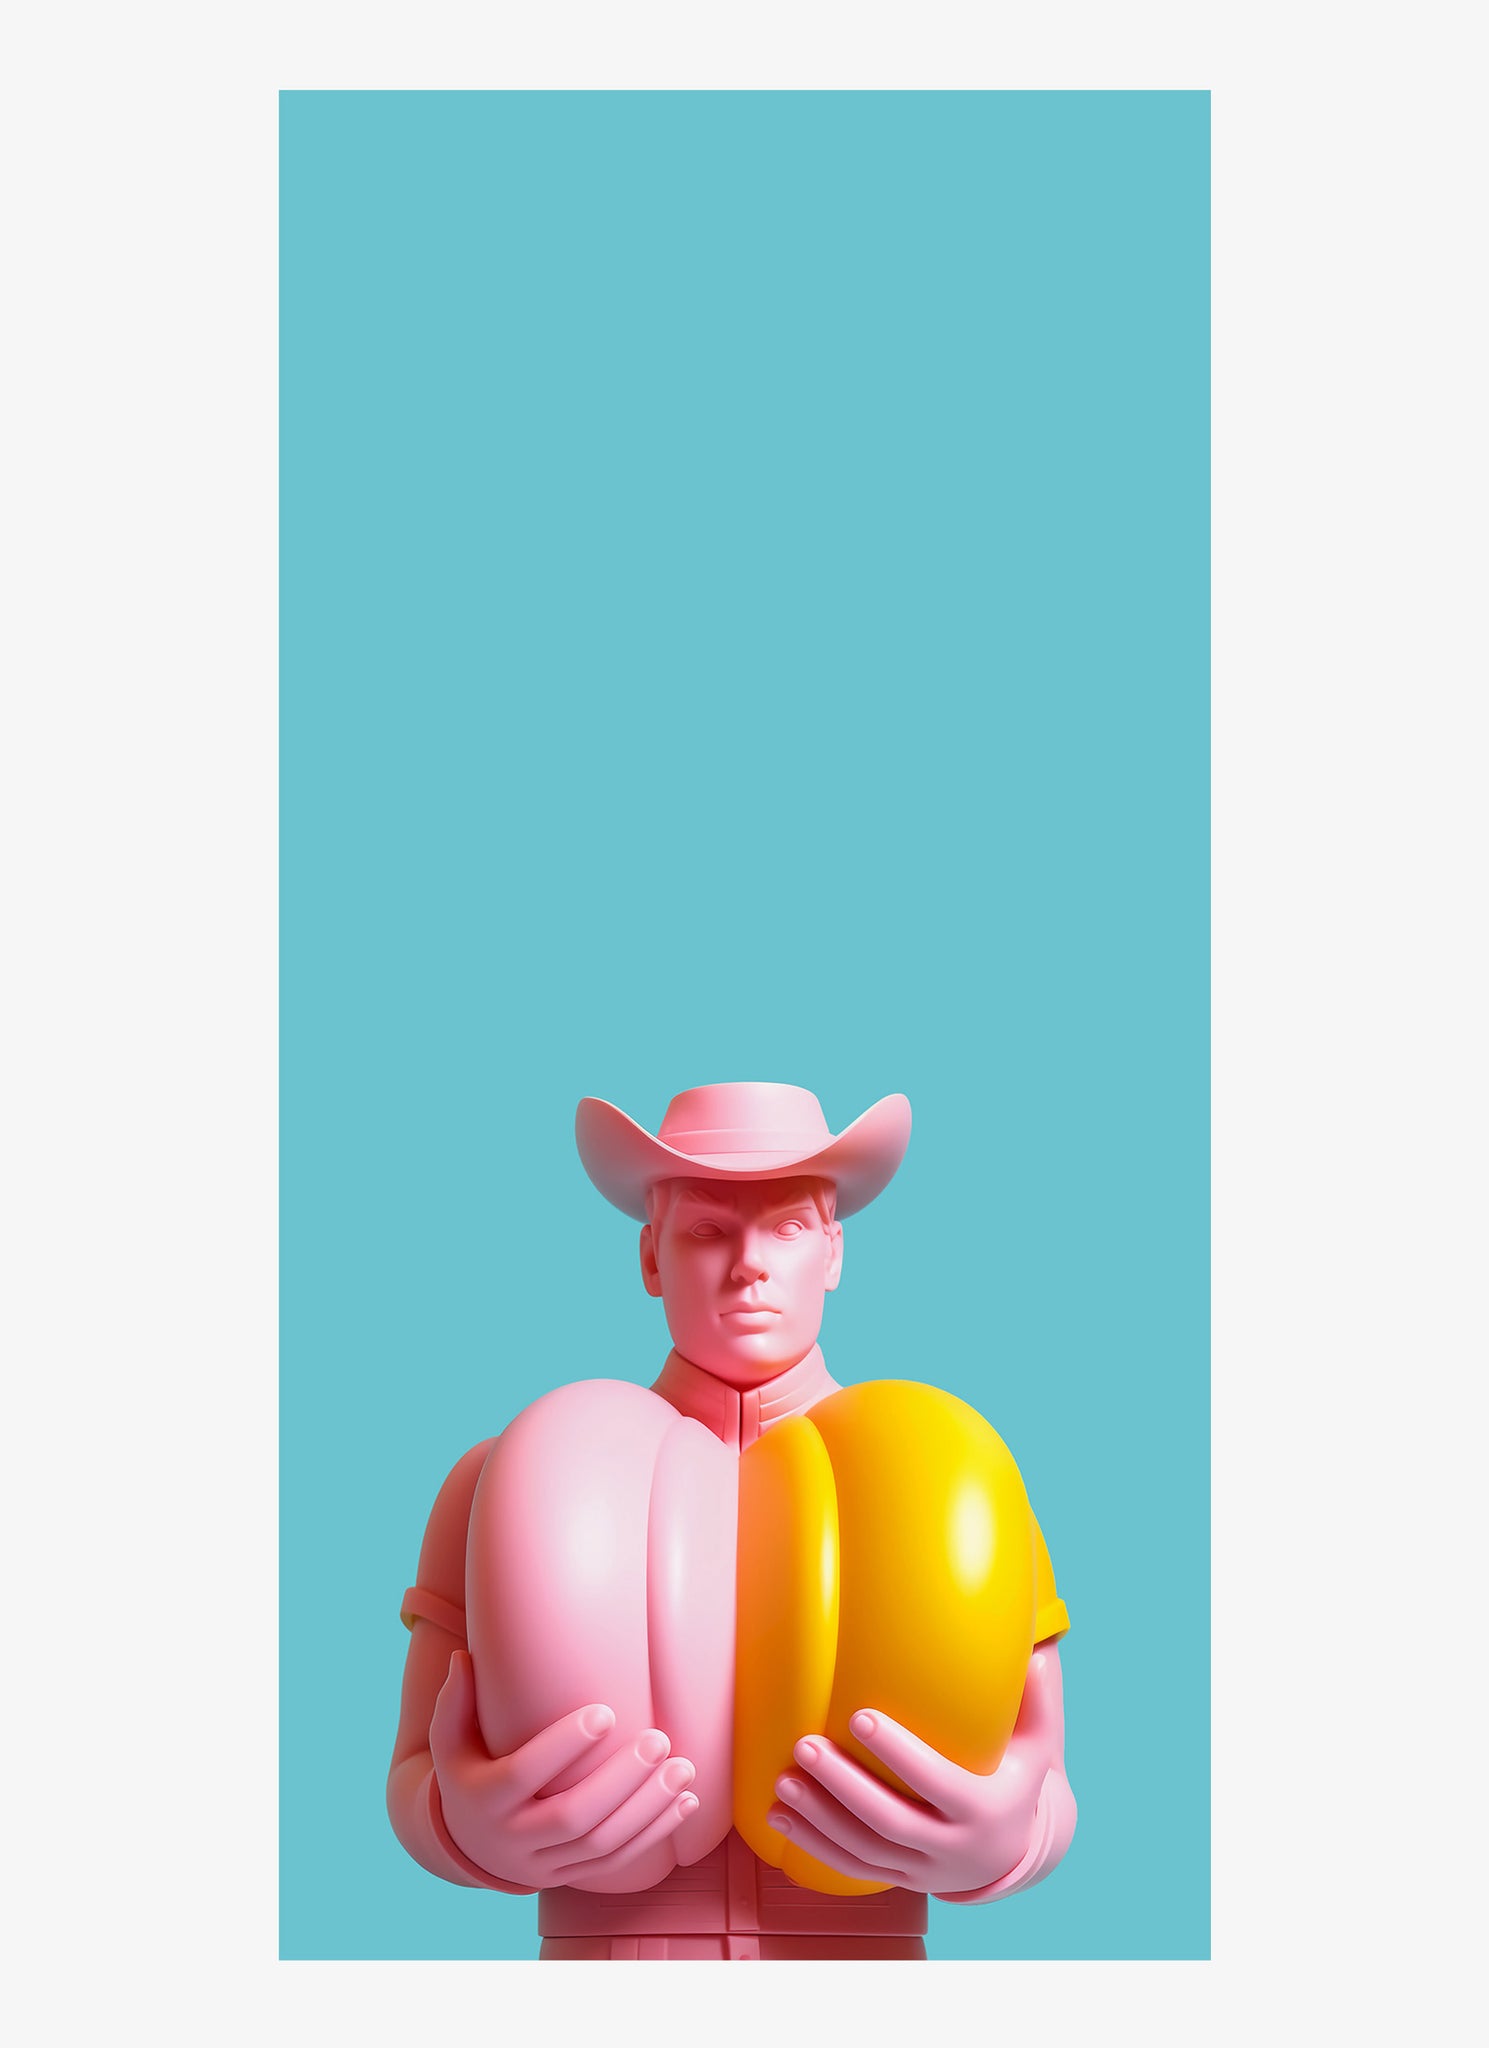 Plastic Cowboy - Harvest (limited edition print)